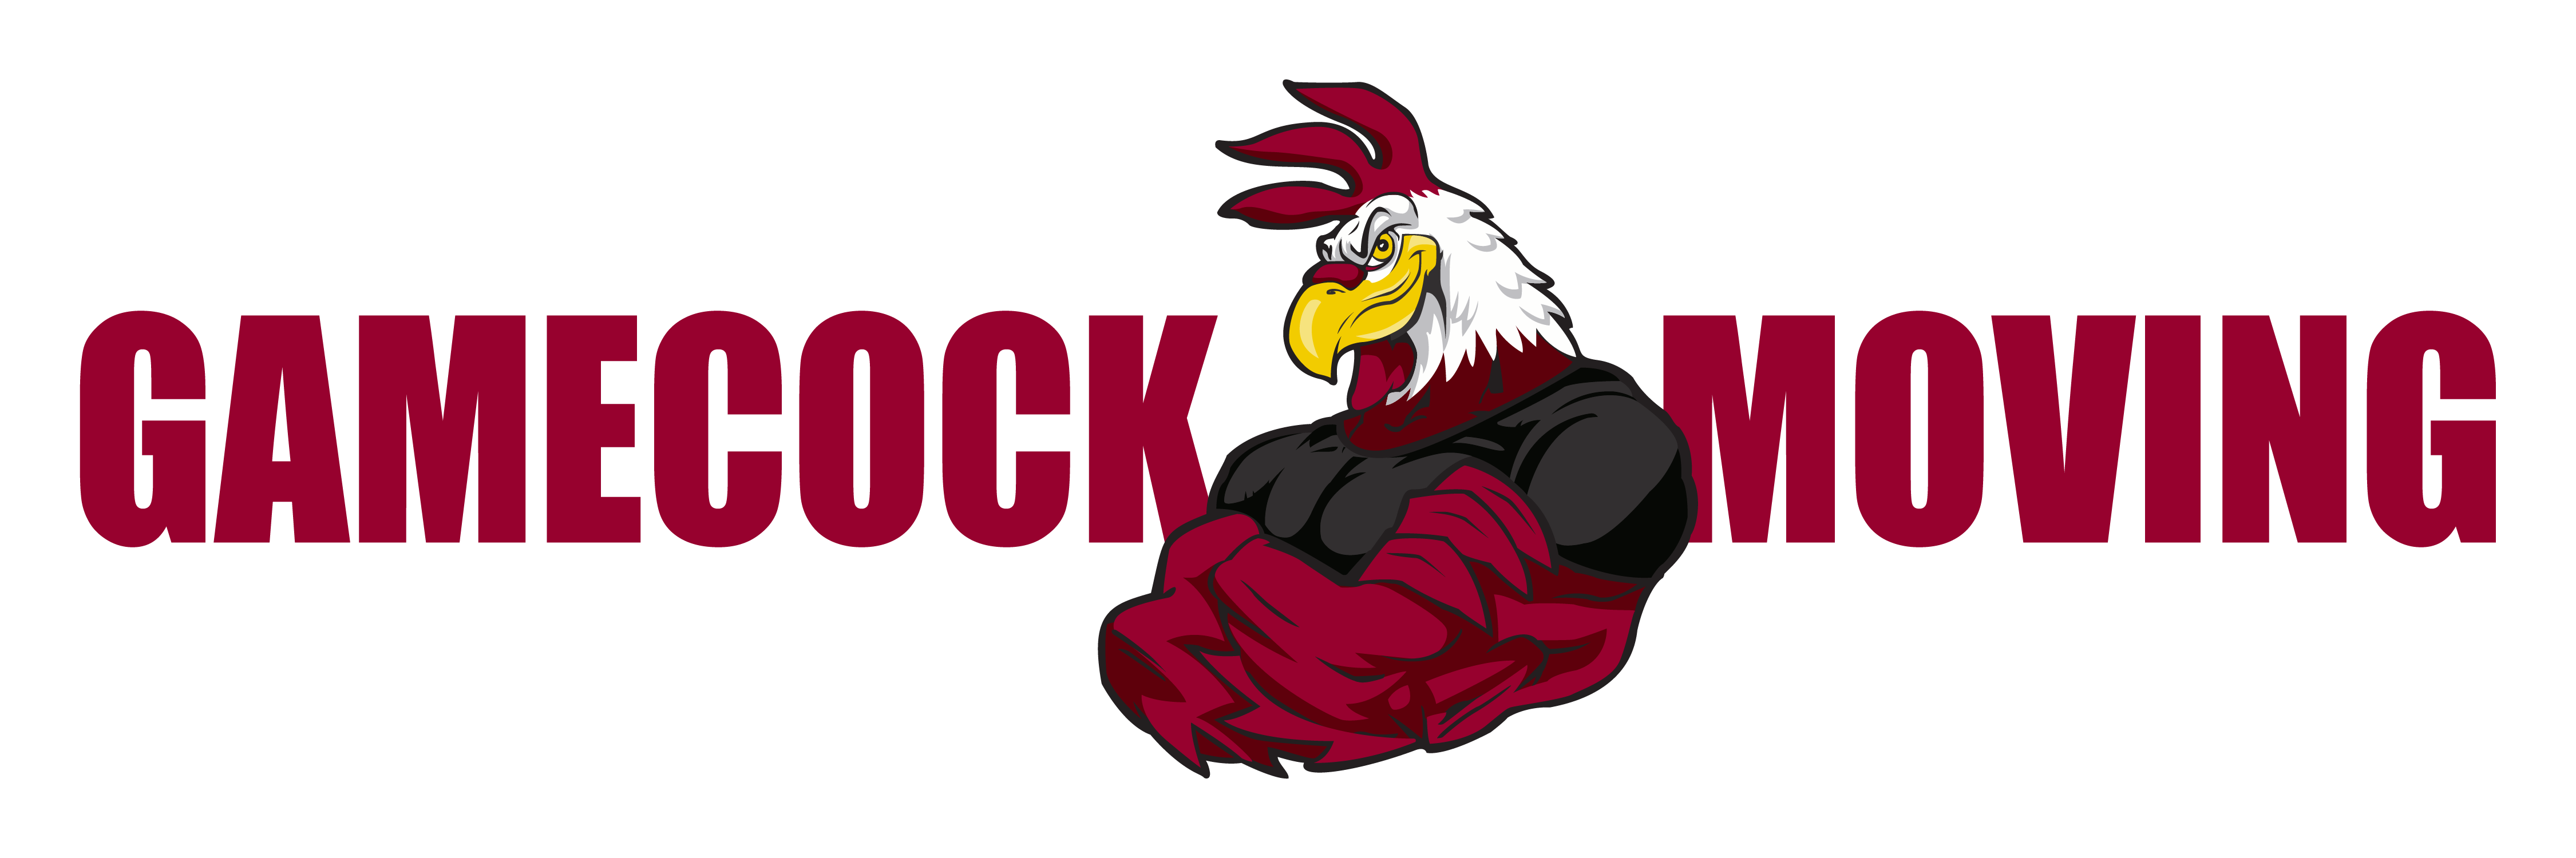 Gamecock Moving logo